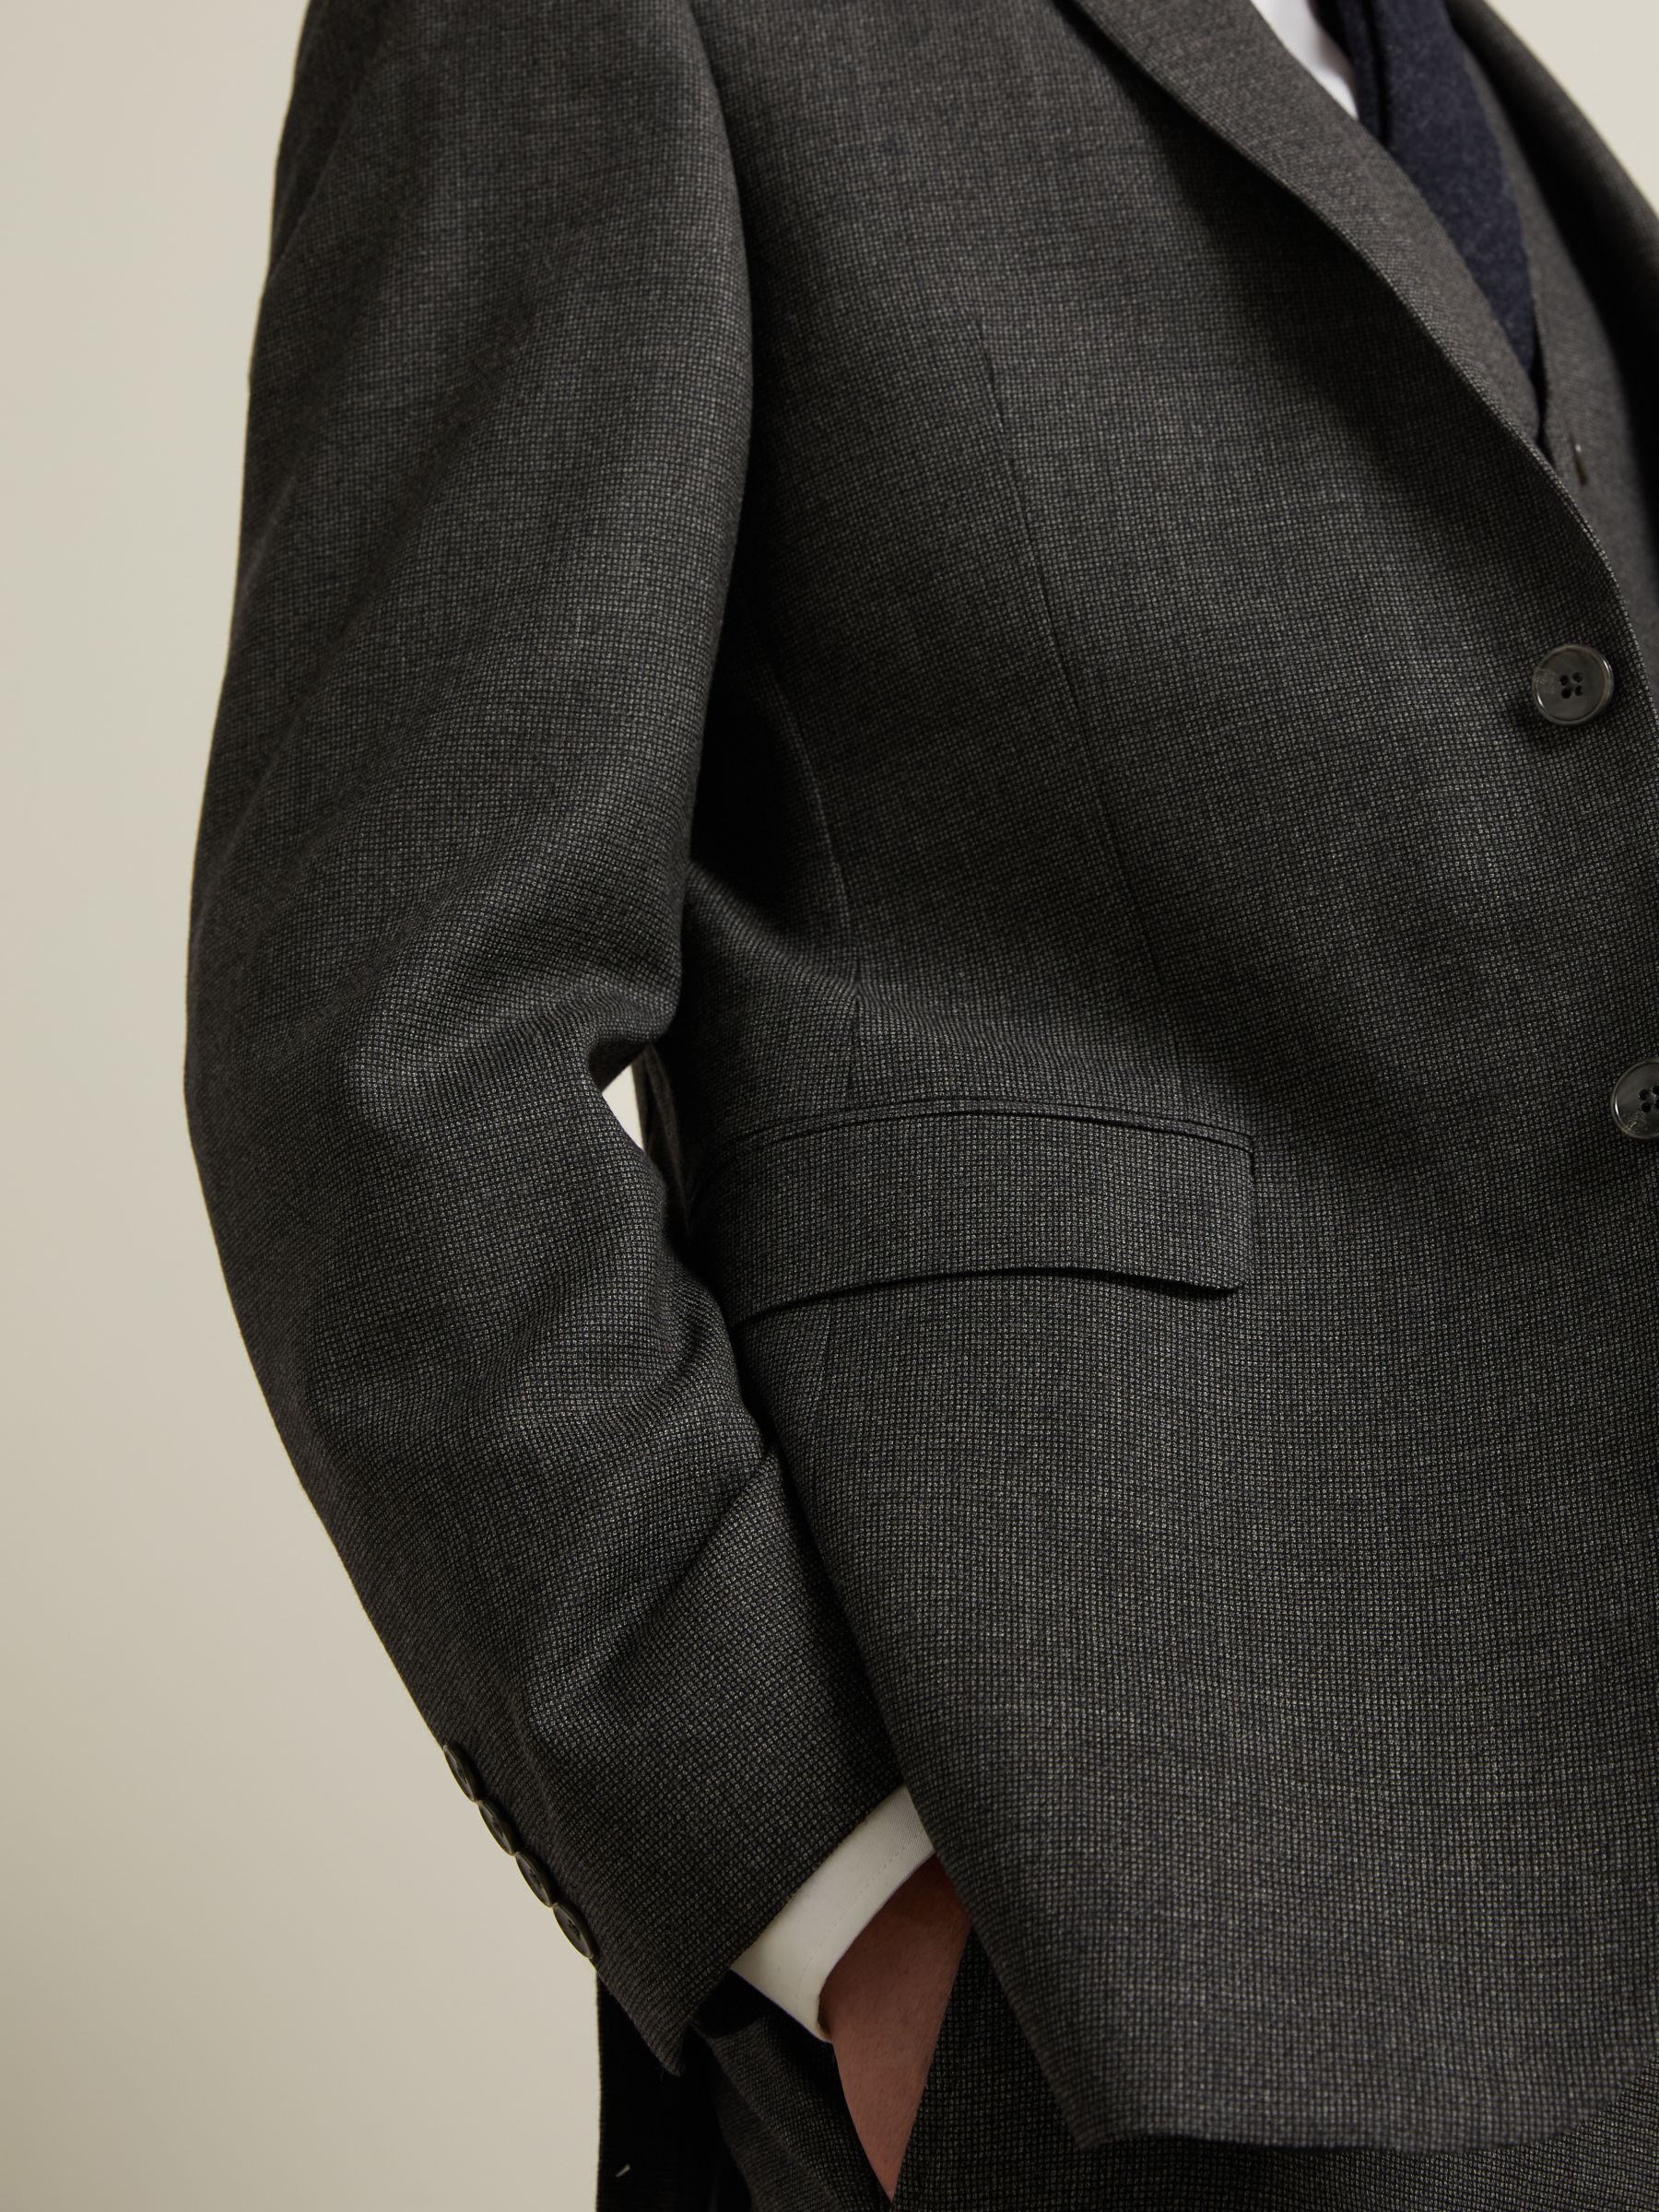 John Lewis & Partners Birdseye Semi Plain Wool Suit Jacket, Charcoal